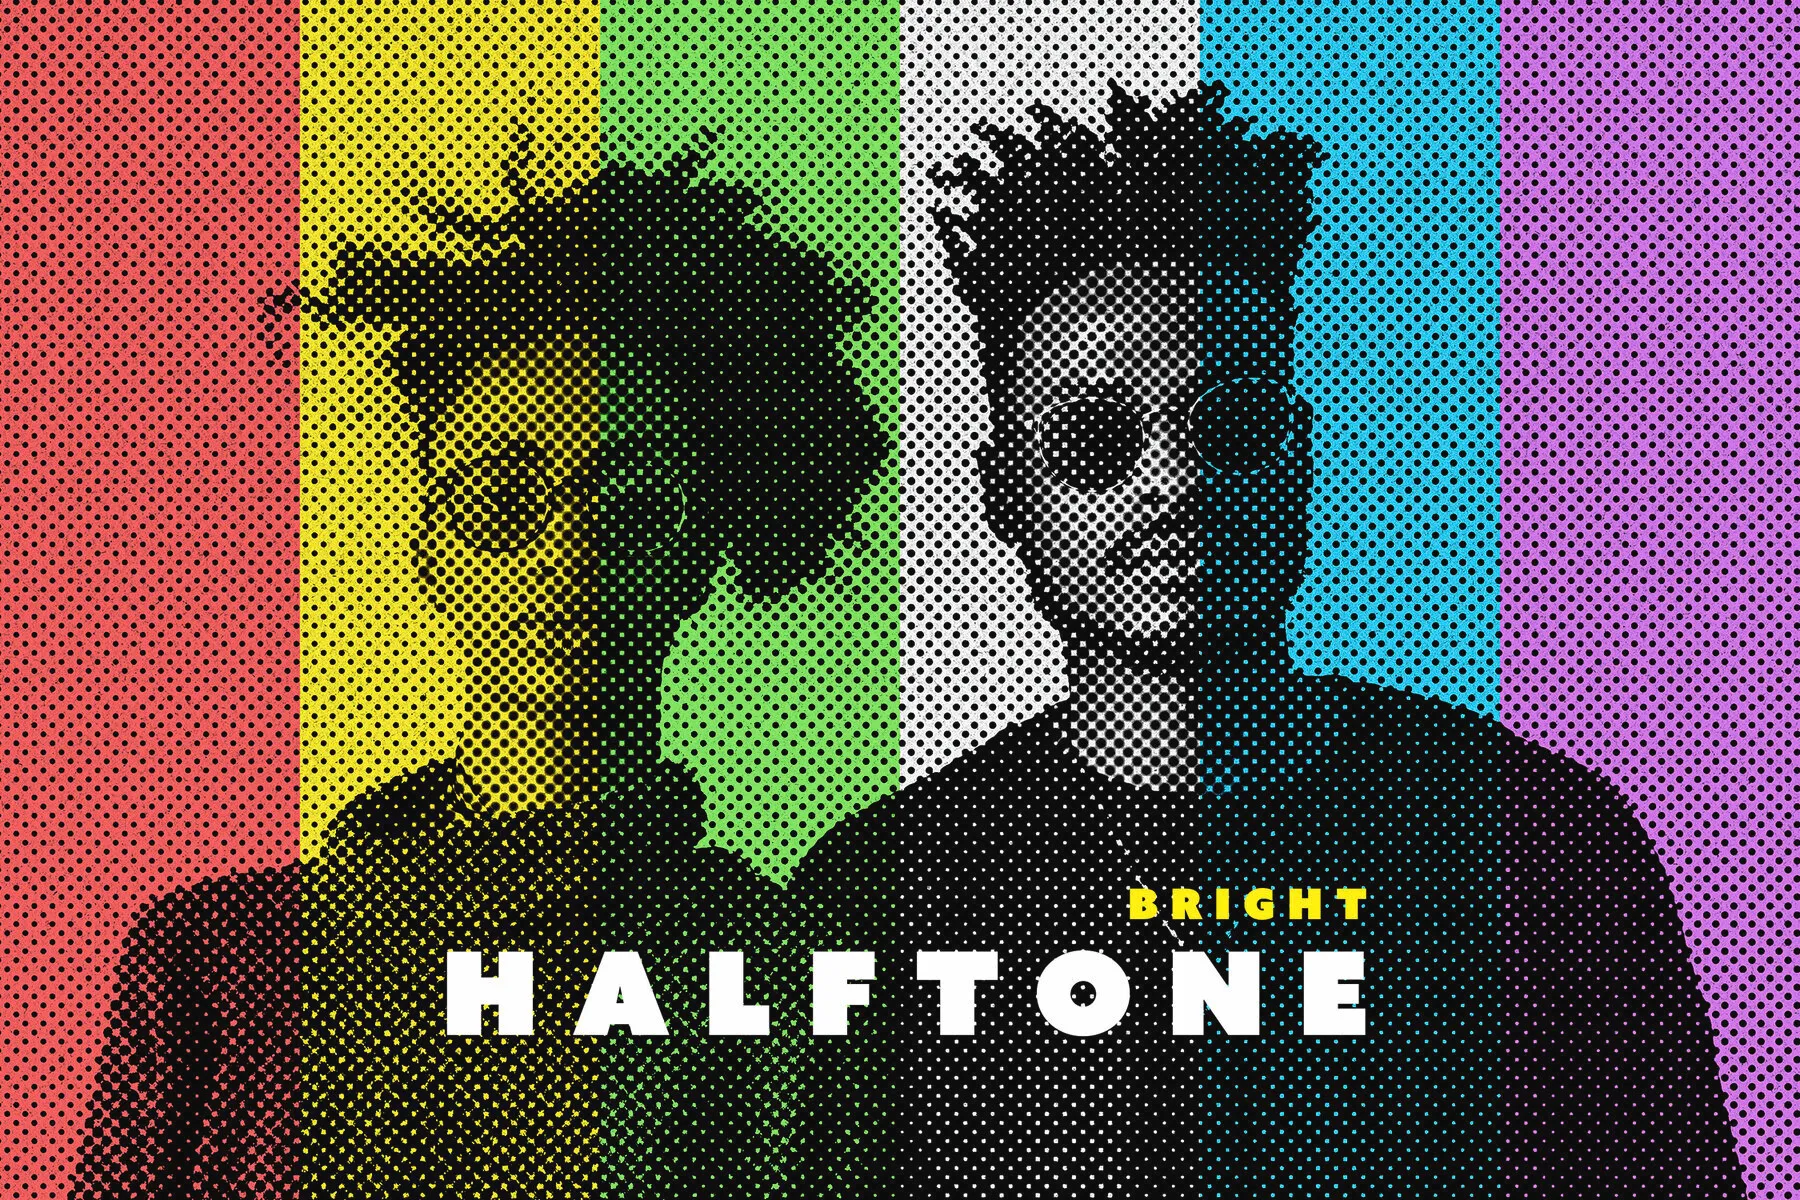 Bright Classic Halftone Photo Effect